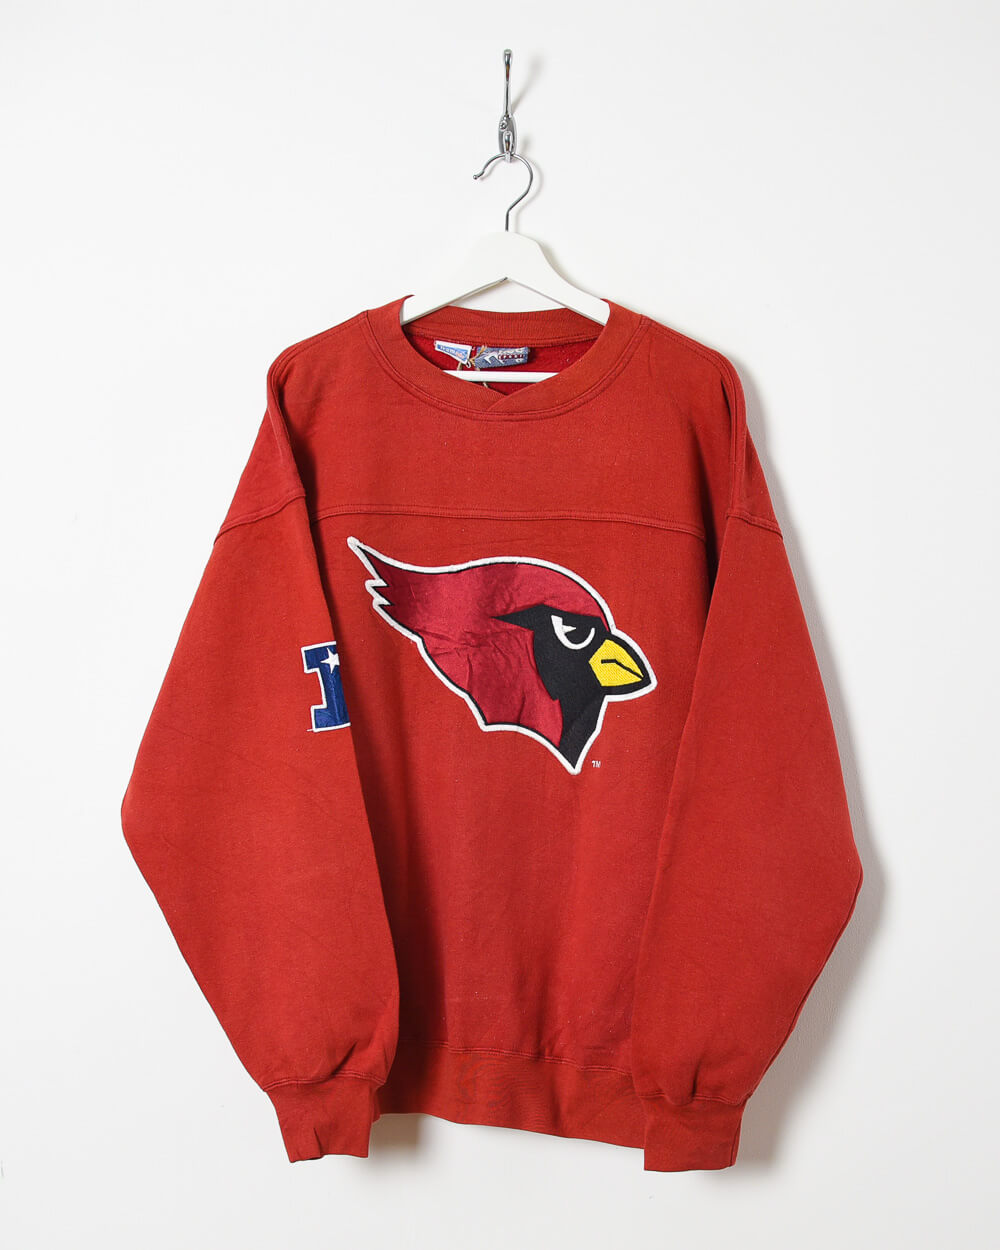 Lee Cardinals Sweatshirt - X-Large - Domno Vintage 90s, 80s, 00s Retro and Vintage Clothing 